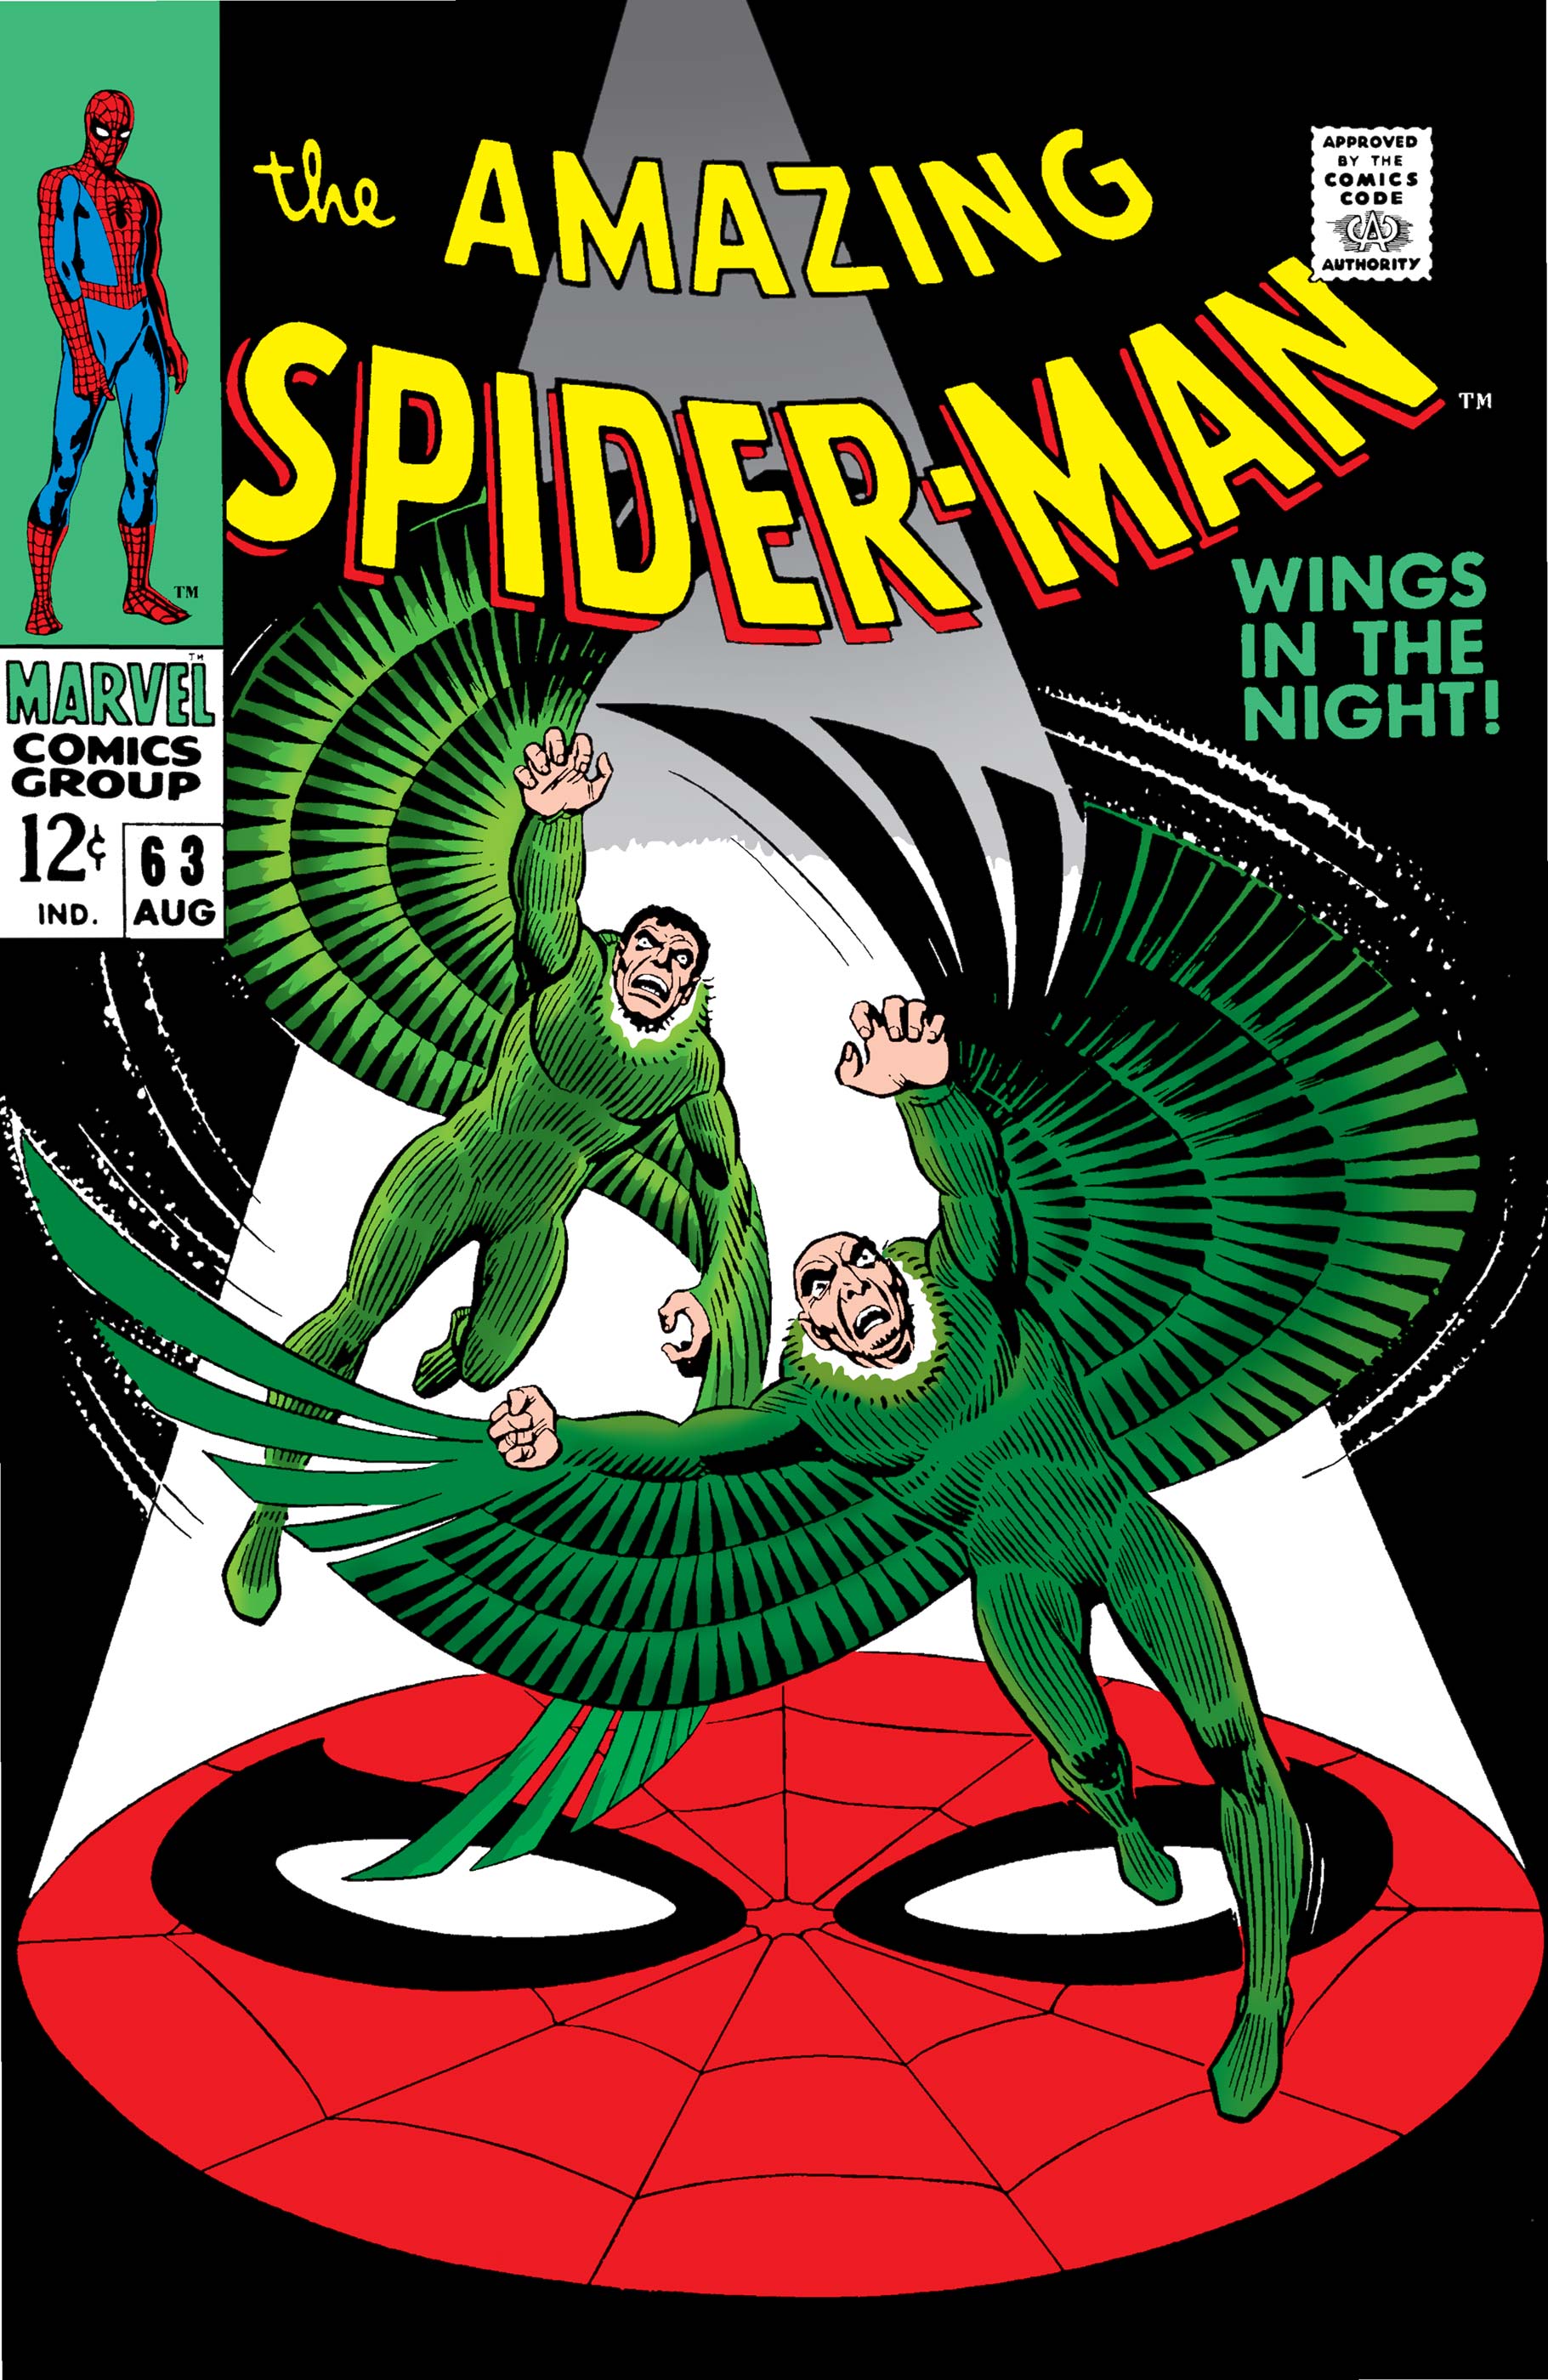 The Amazing Spider-Man (1963) #63